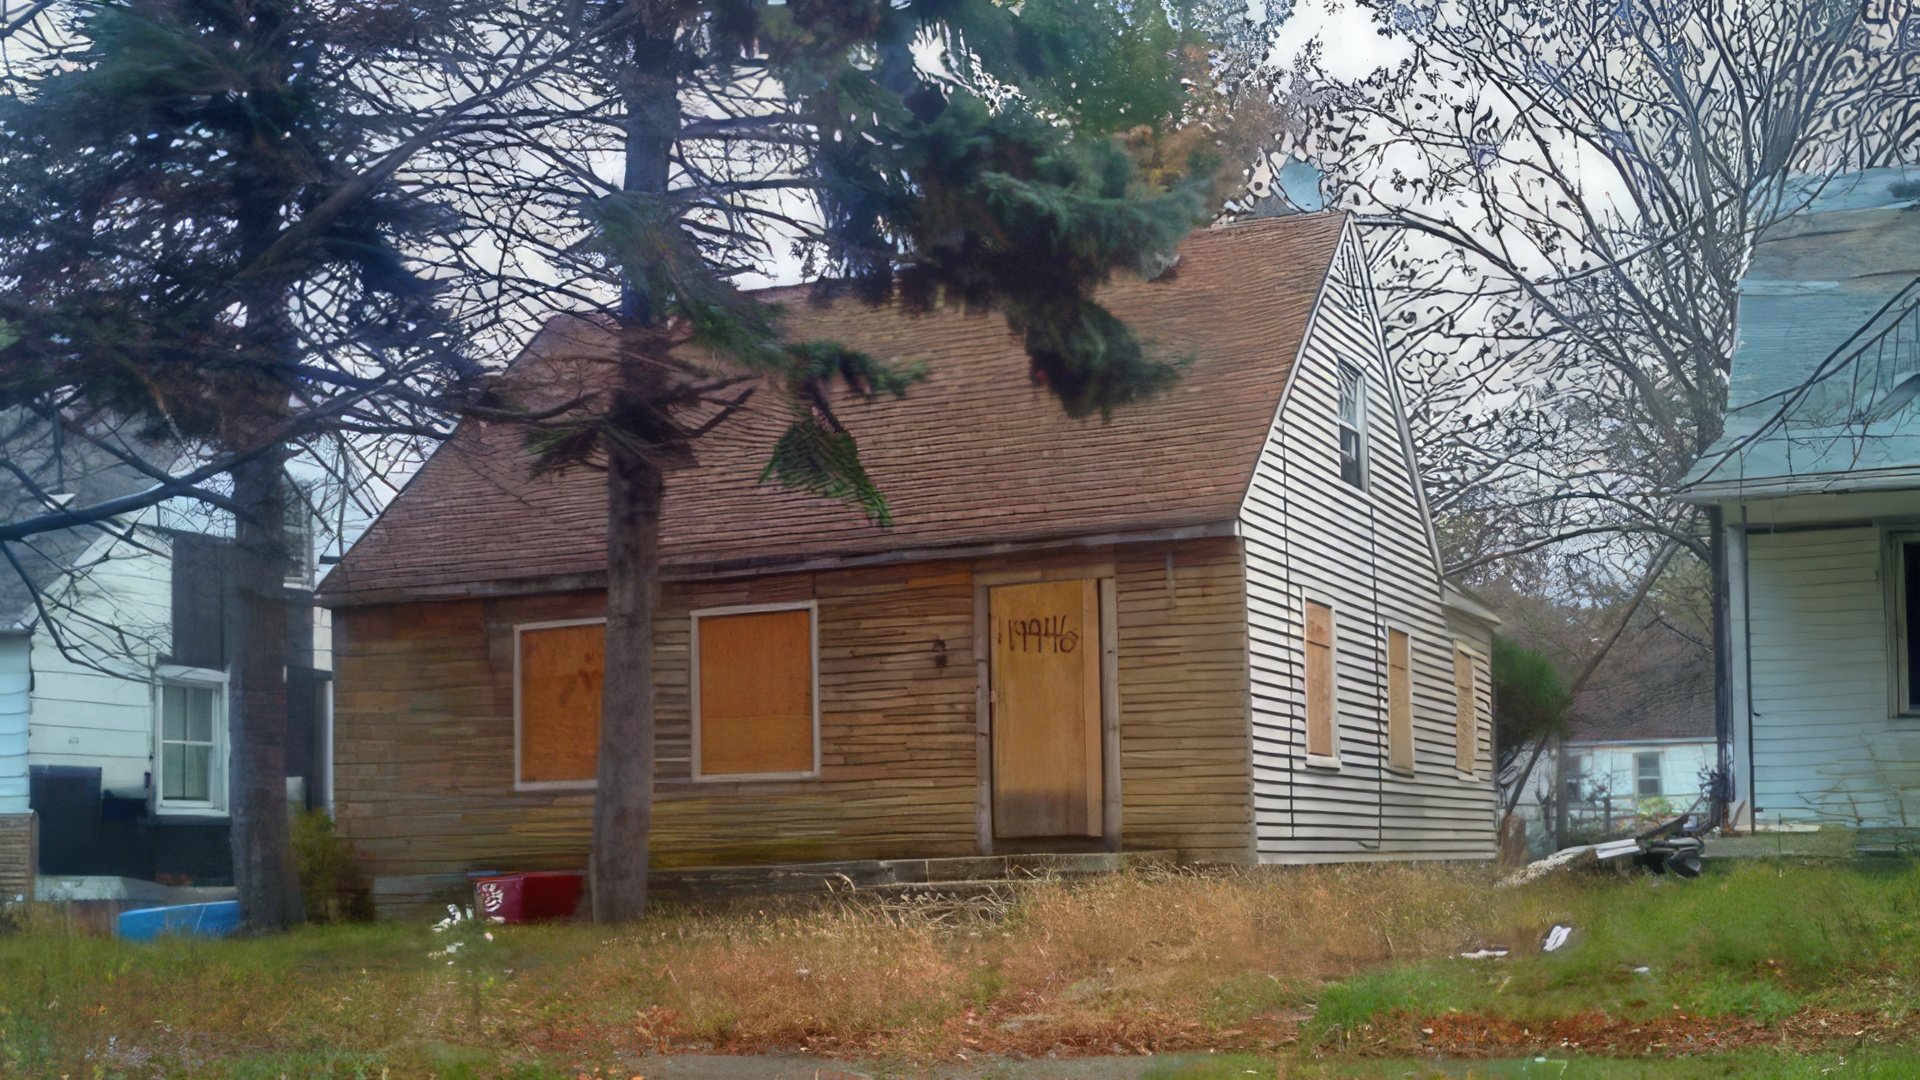 The house in Detroit where Eminem spent his childhood